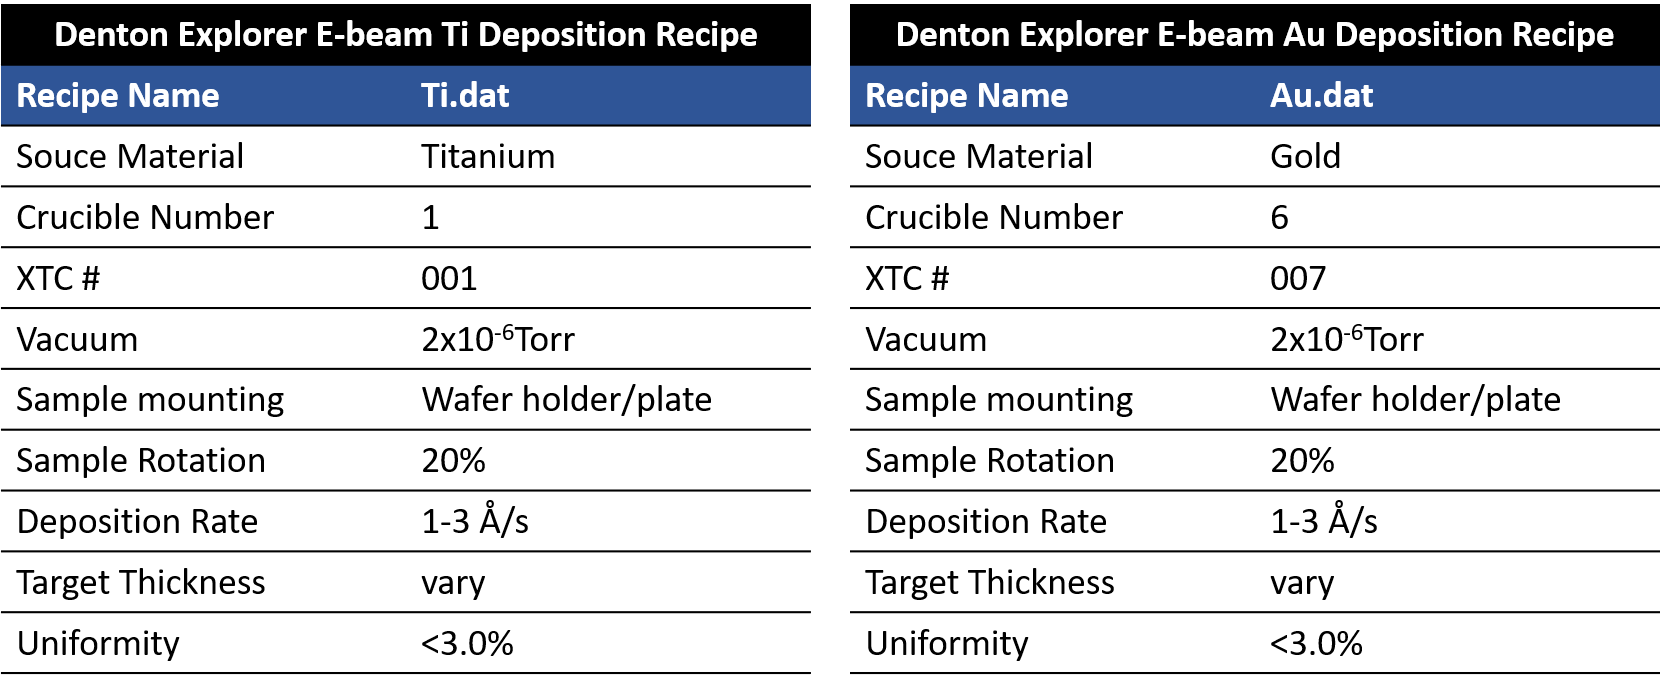 Denton Explorer Deposition